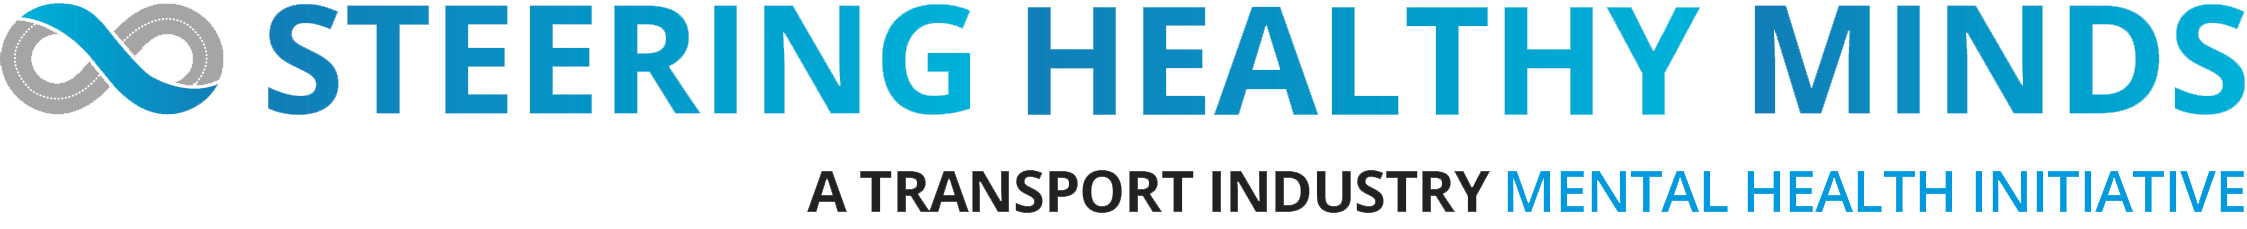 Steering Healthy minds logo